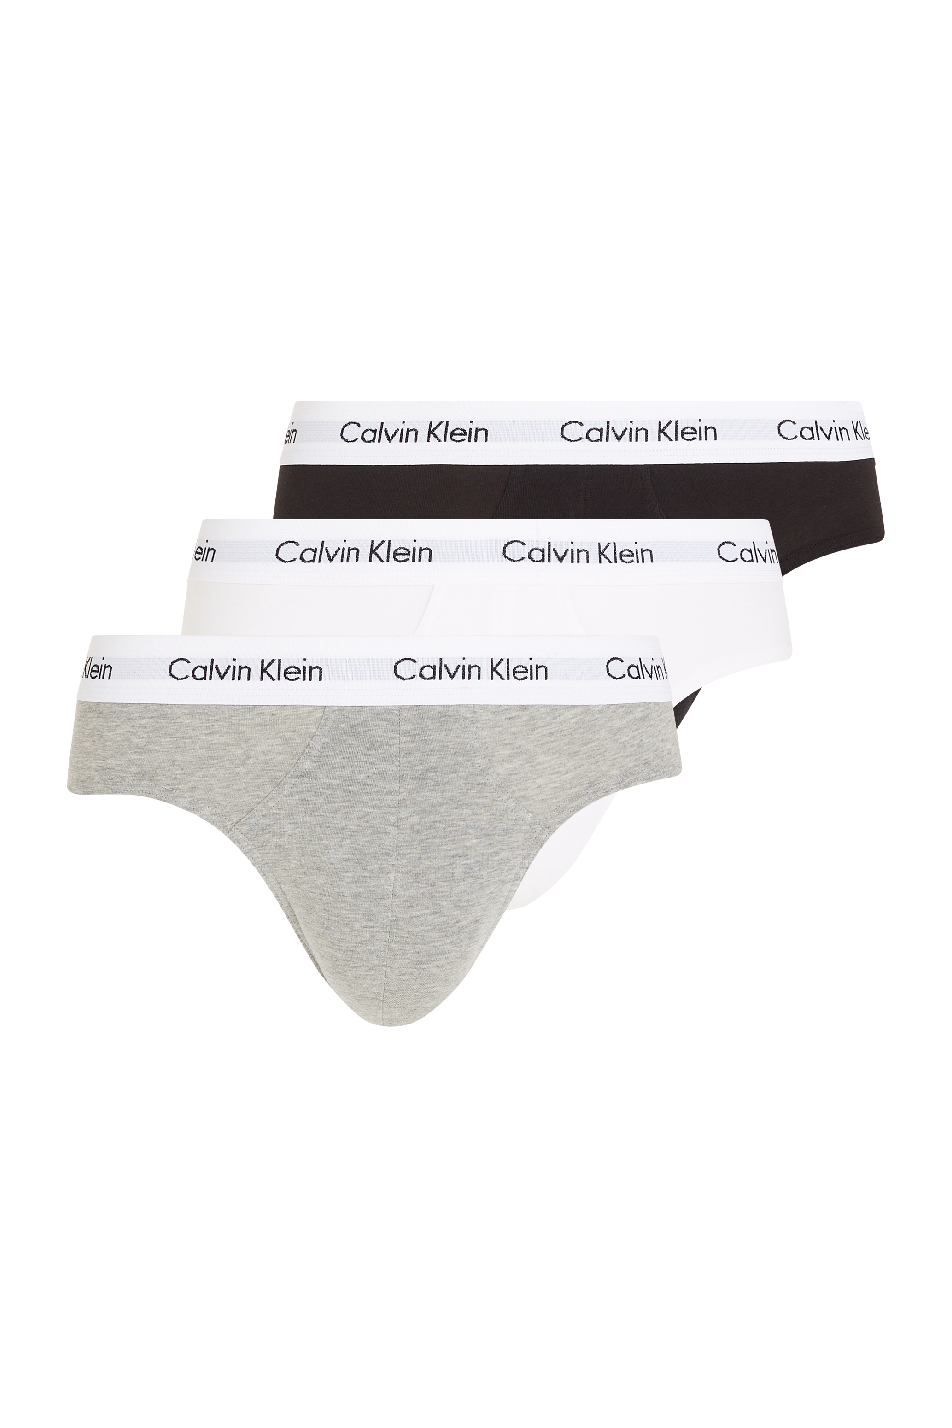 Calvin Klein 3 Pack Hip Briefs | Save 20% on Subscription | Pants & Socks